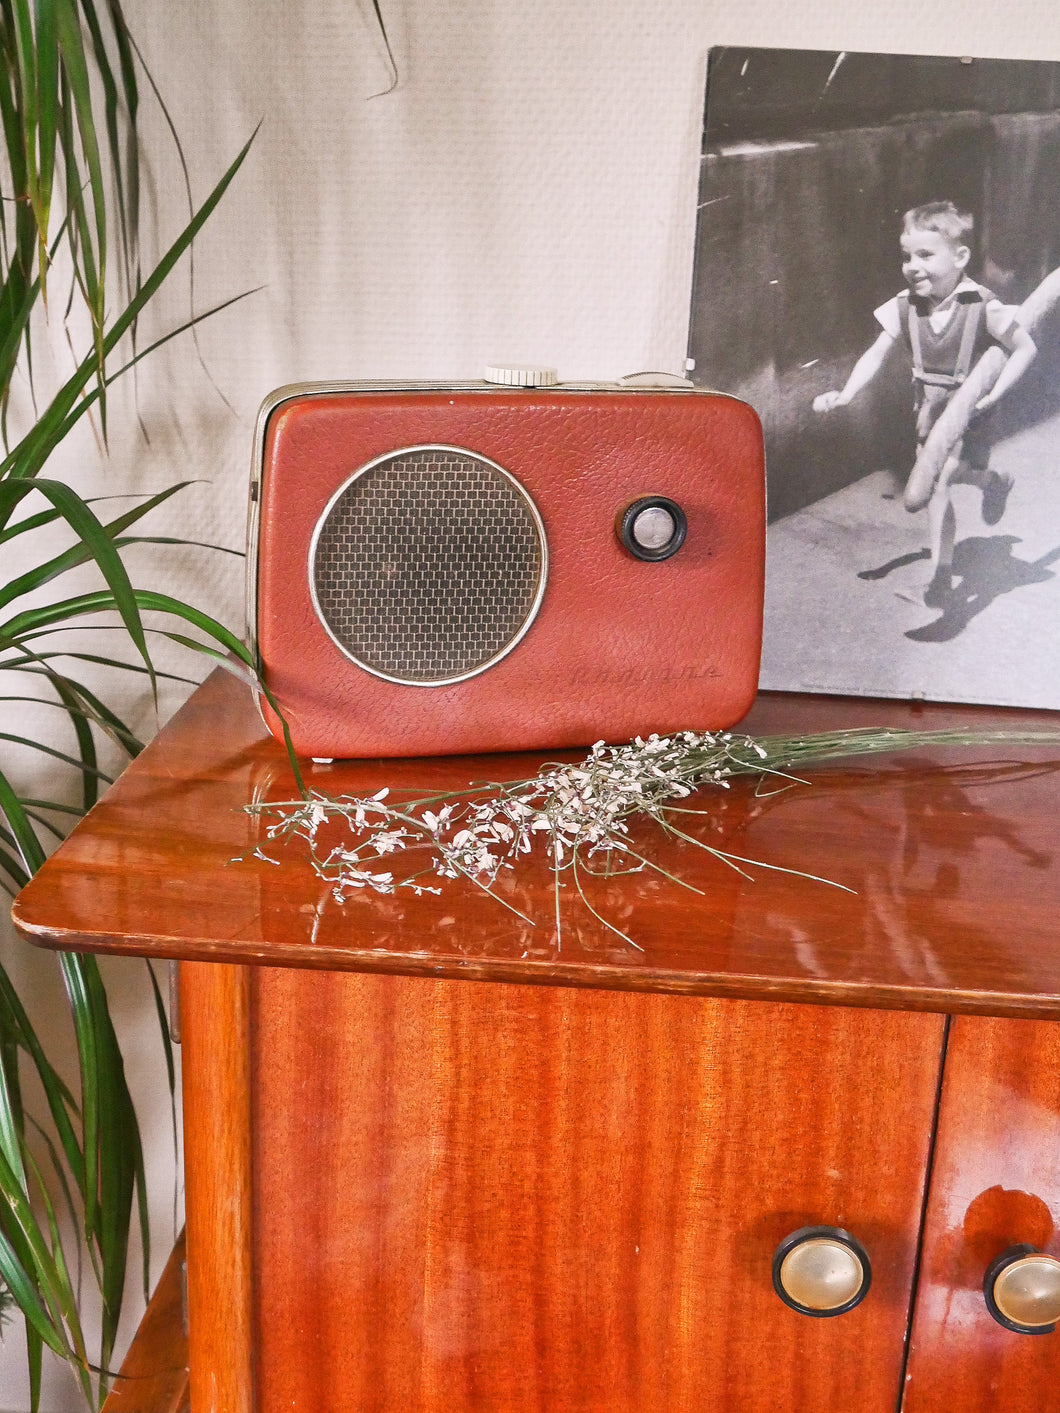 Radio portable vintage